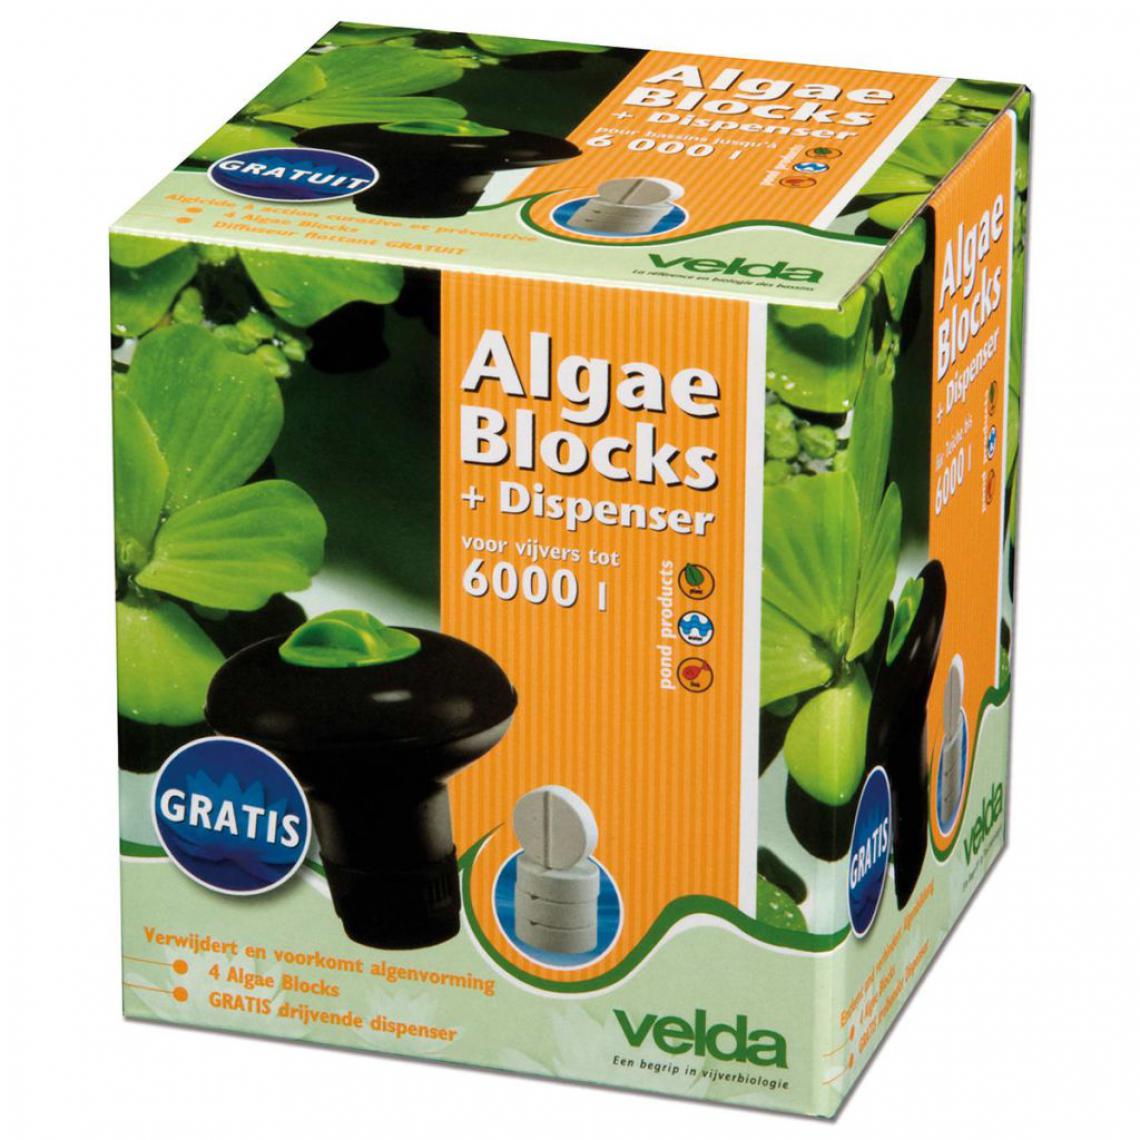 Velda - Velda Comprimés anti-algues avec distributeur - Bassin poissons